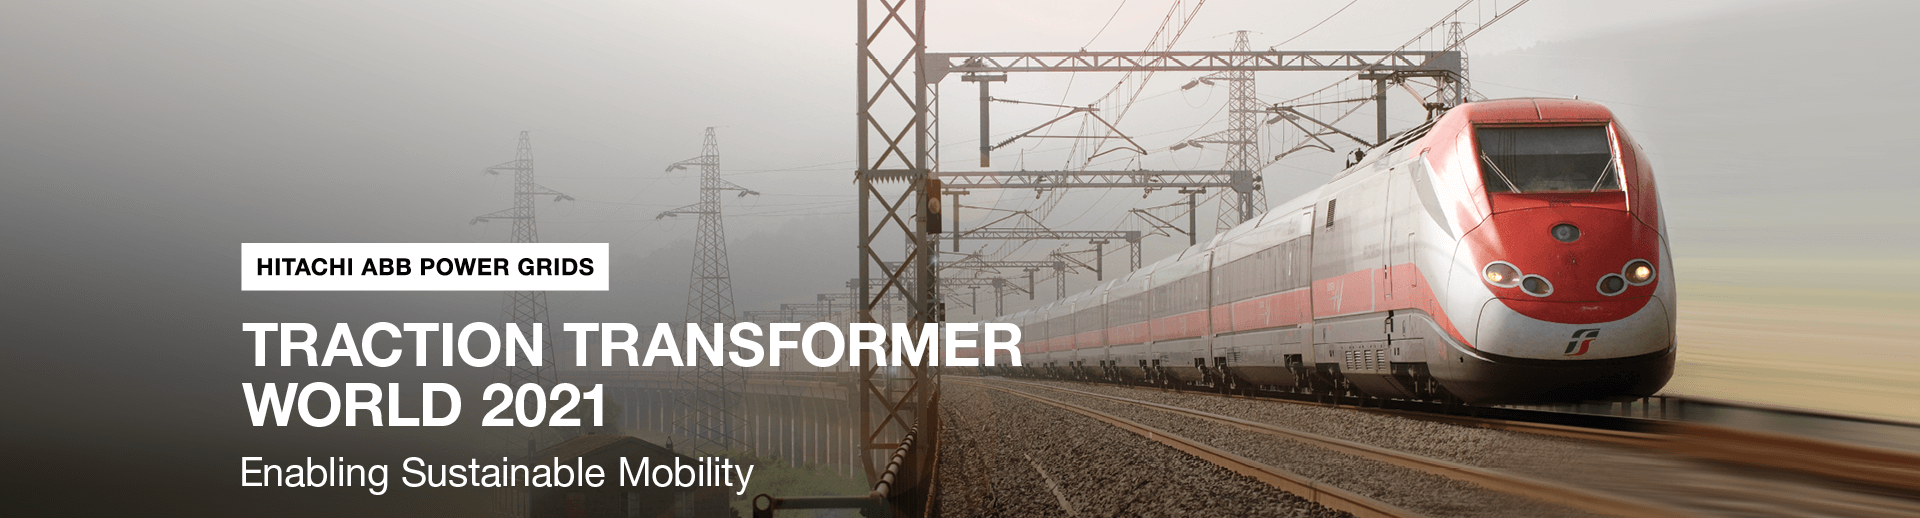 Hitachi ABB Power Grids Traction Transformer World